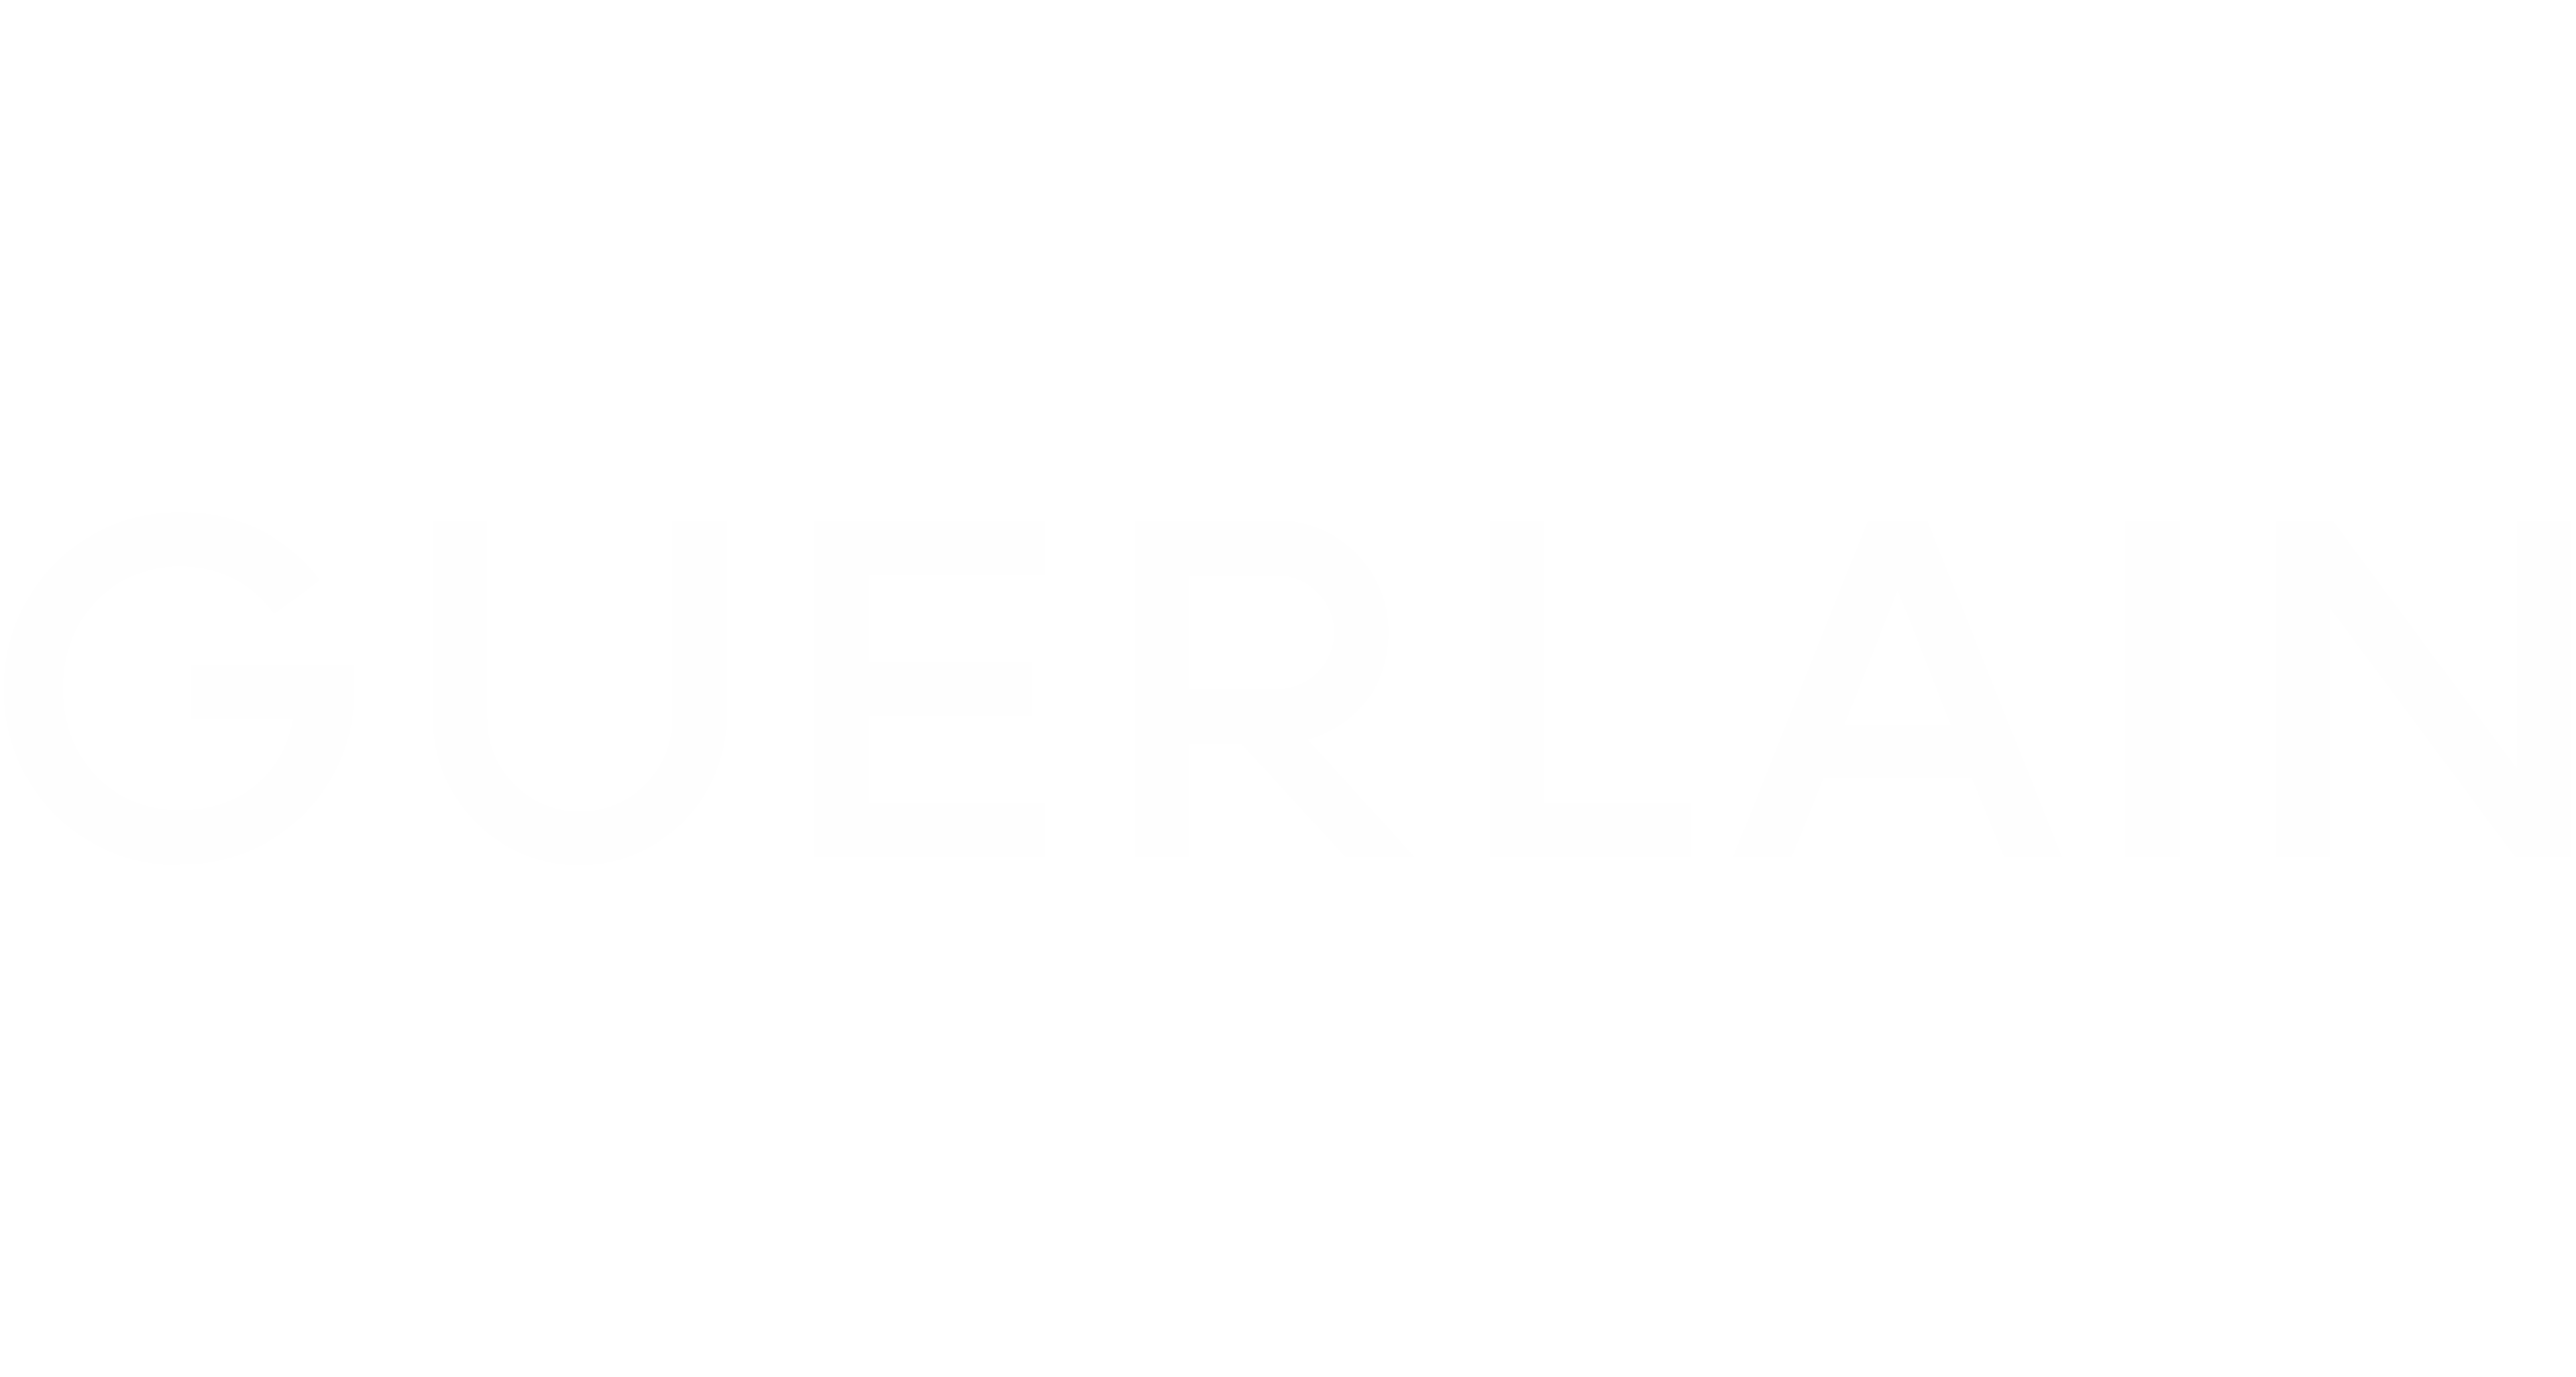 Guerlain-logo